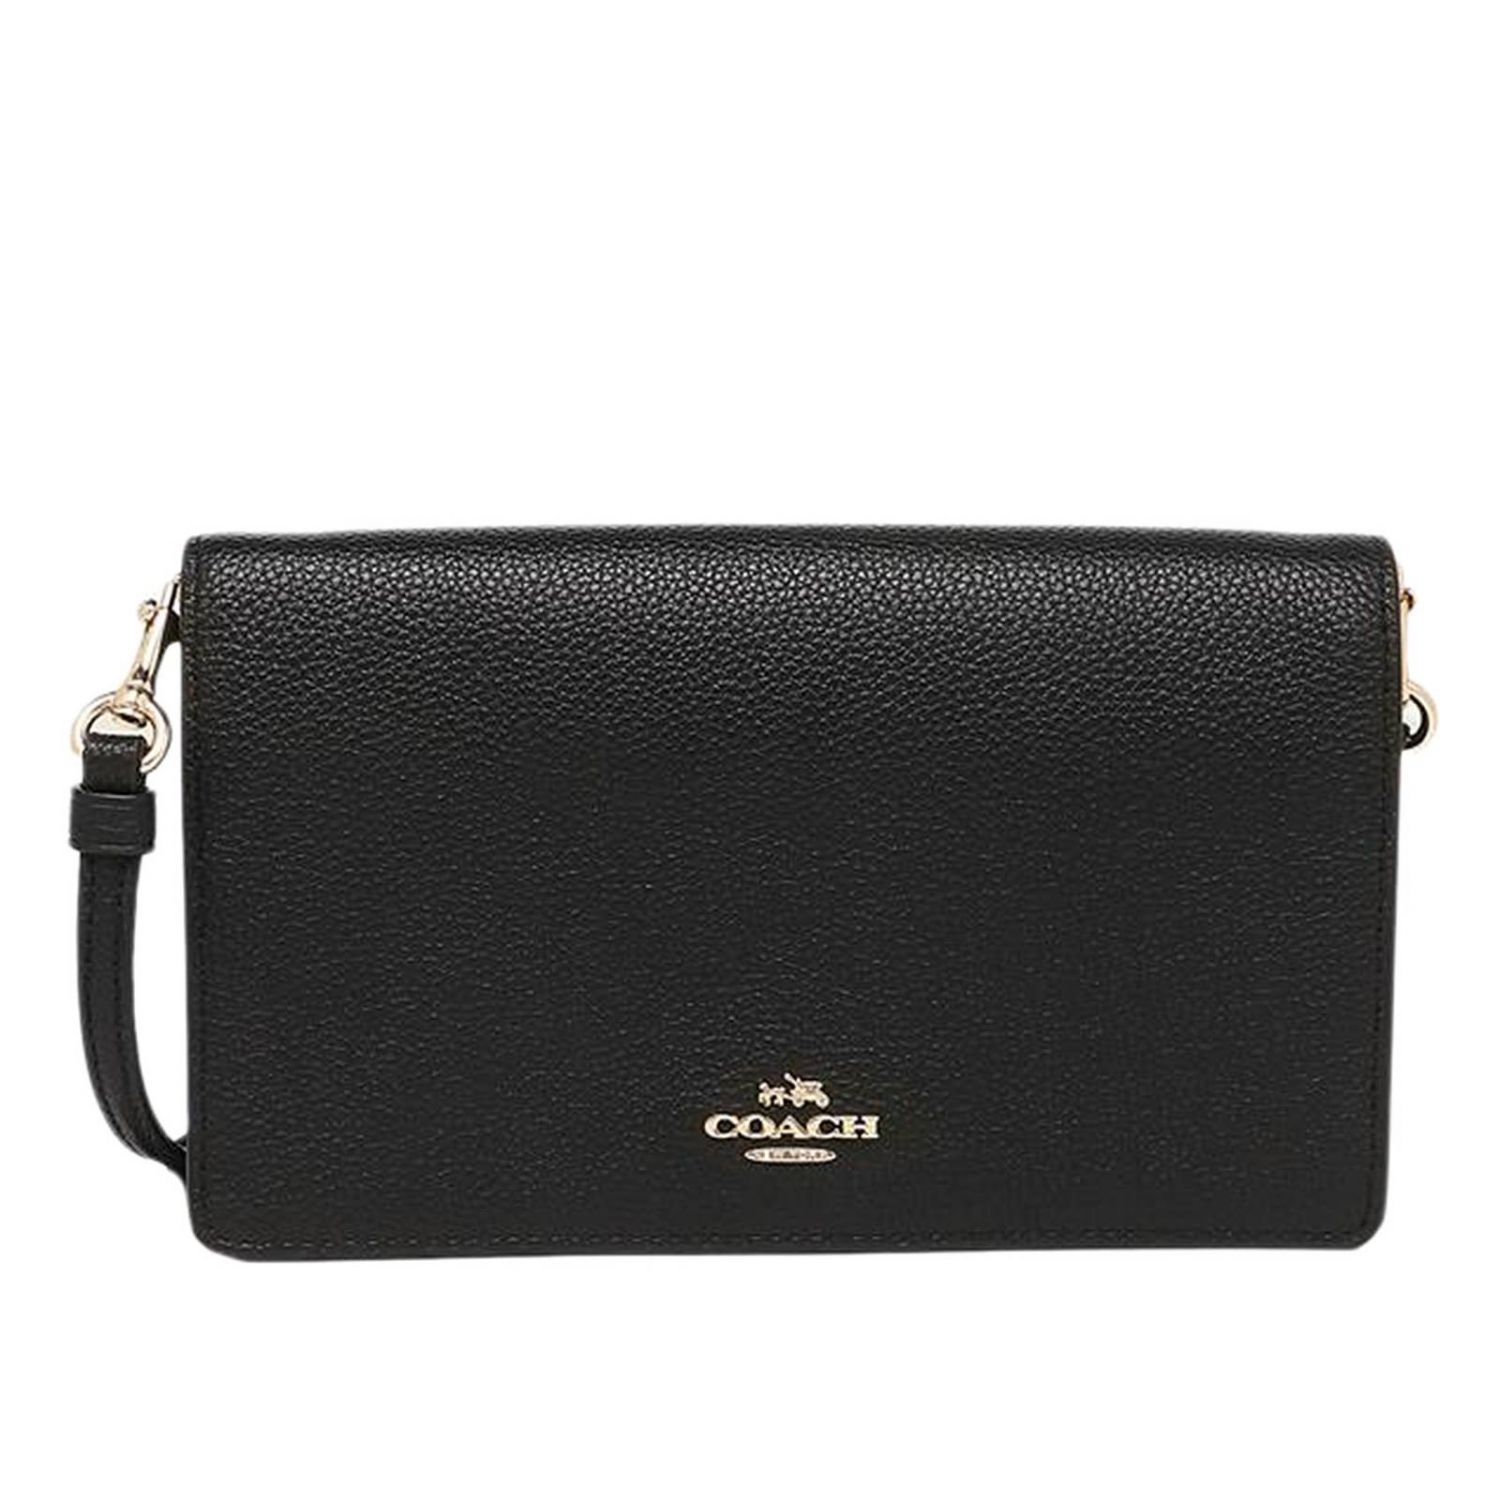 Coach Outlet: Shoulder bag women - Black | Mini Bag Coach 87401 GIGLIO.COM